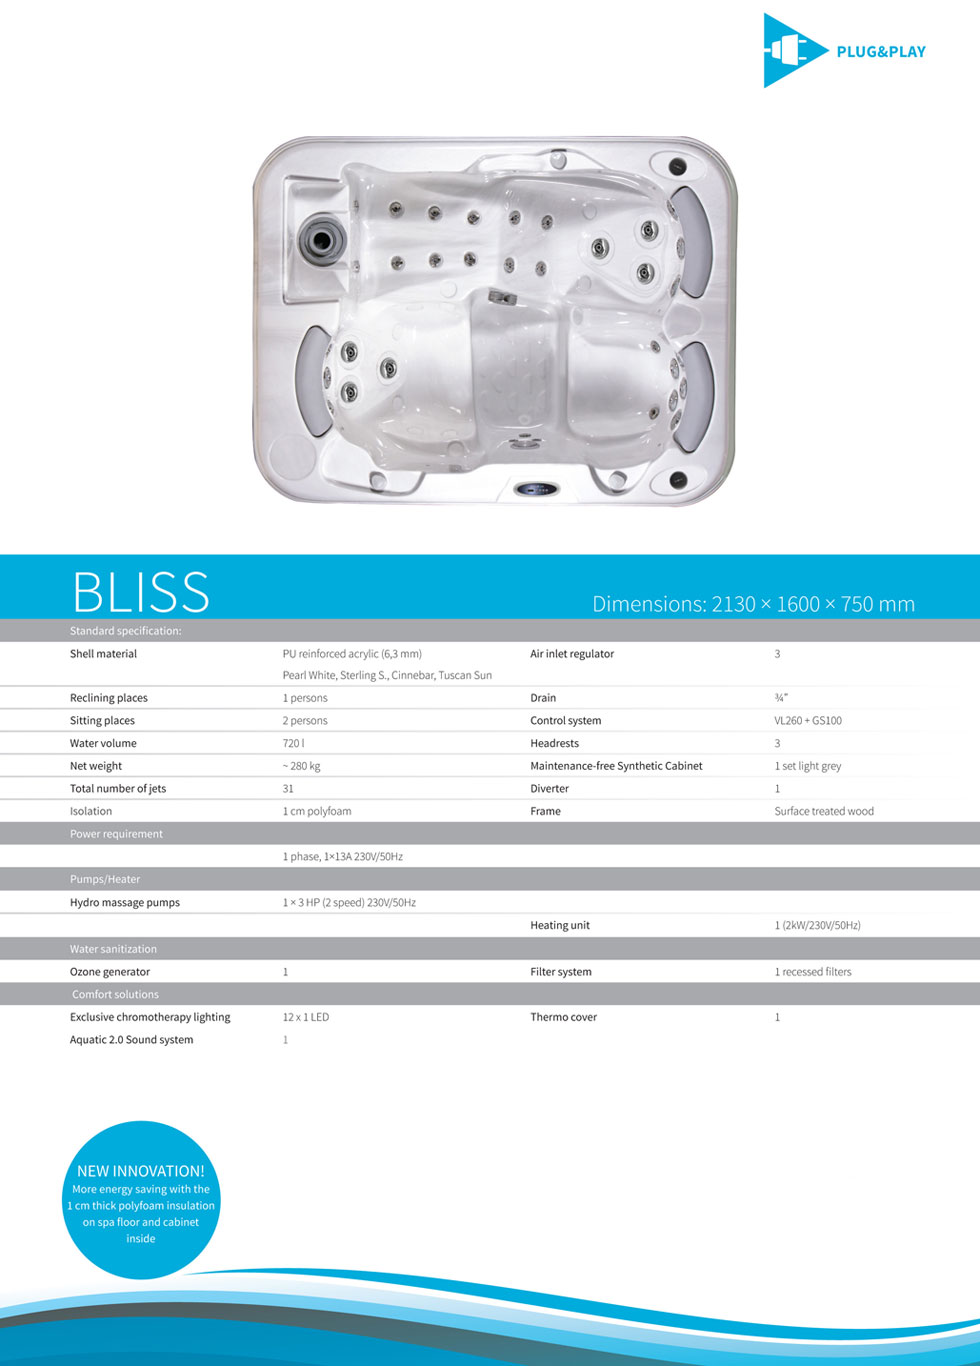 Superior - Bliss 13AMP Plug & Play Hot Tub EU Made Spa